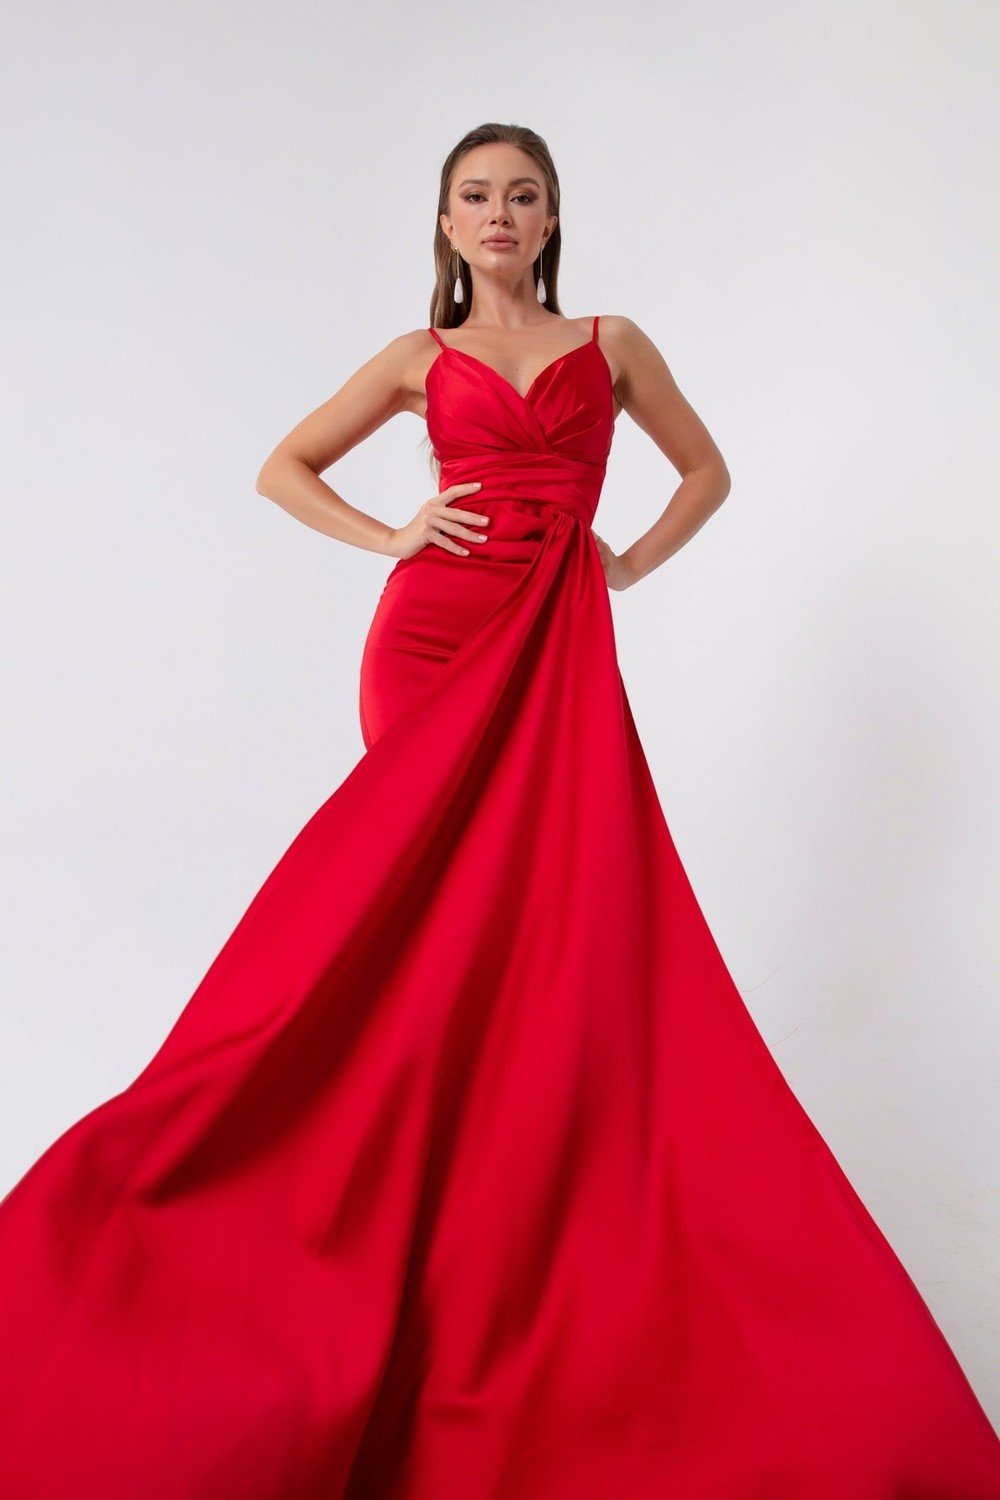 Lafaba Evening & Prom Dress - Red - Both Ruffle